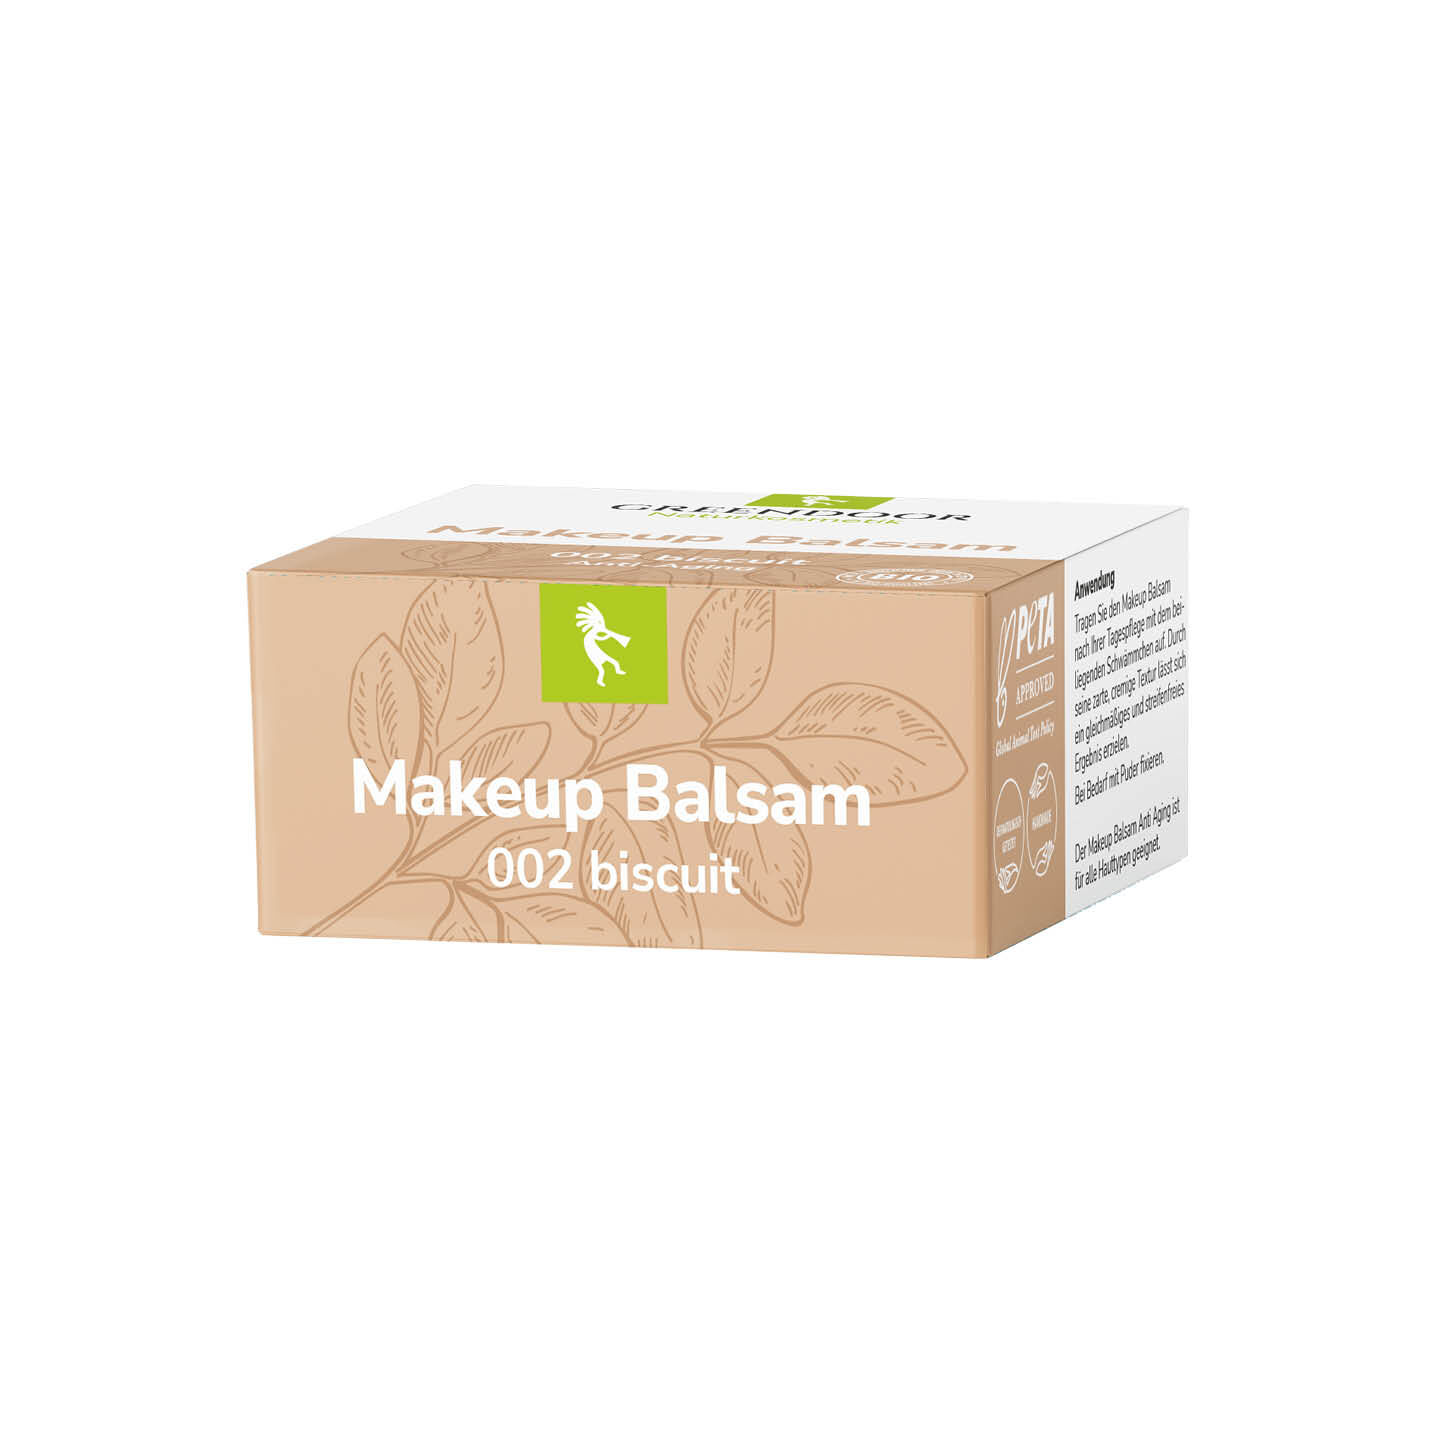 Make-up Balsam biscuit